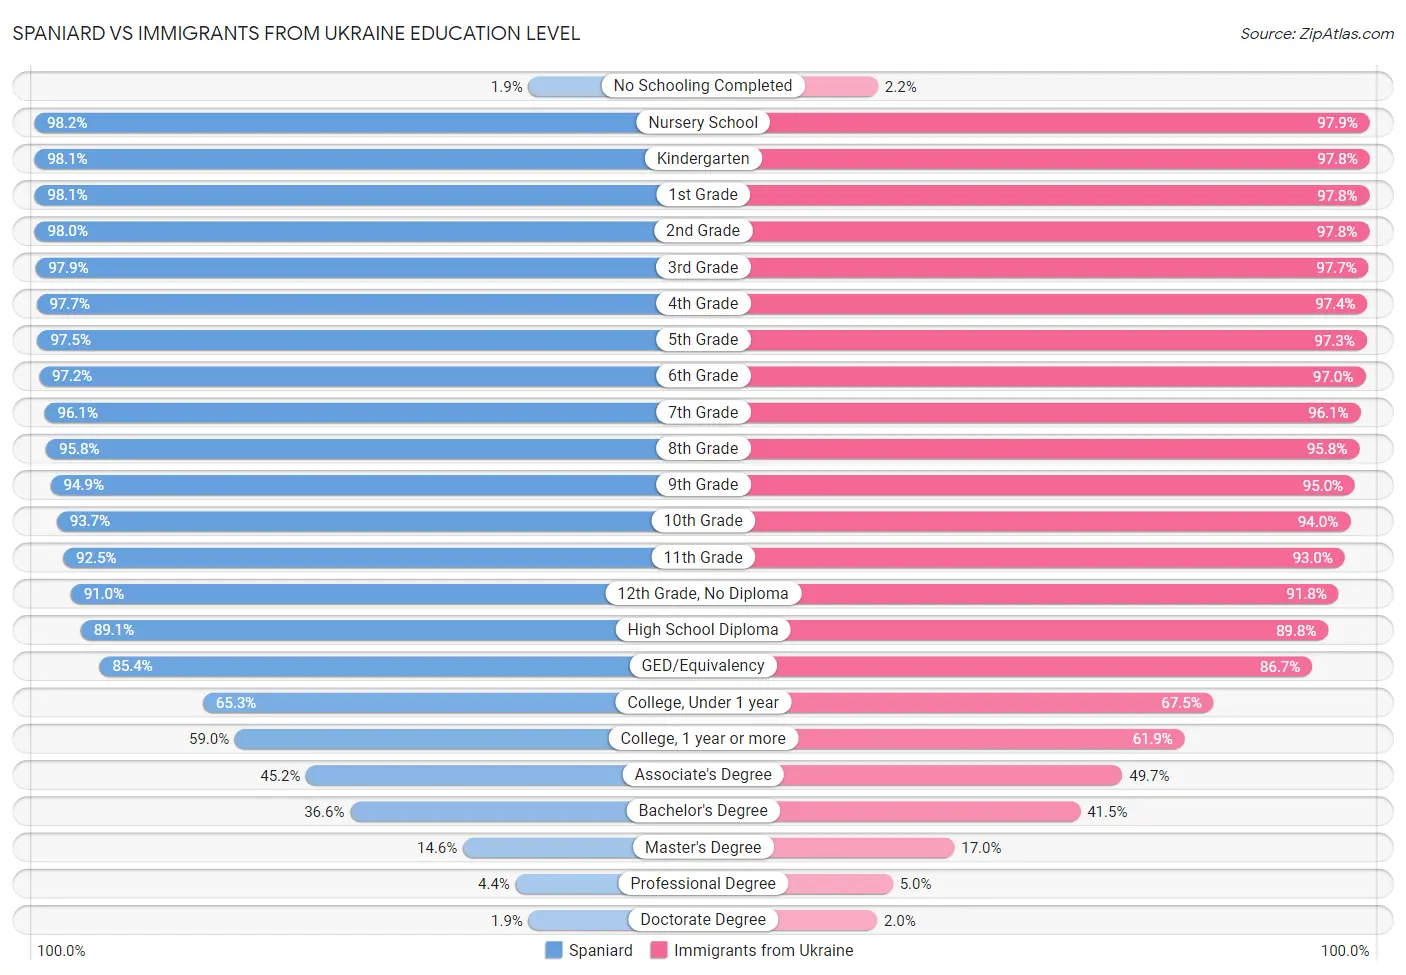 Spaniard vs Immigrants from Ukraine Education Level